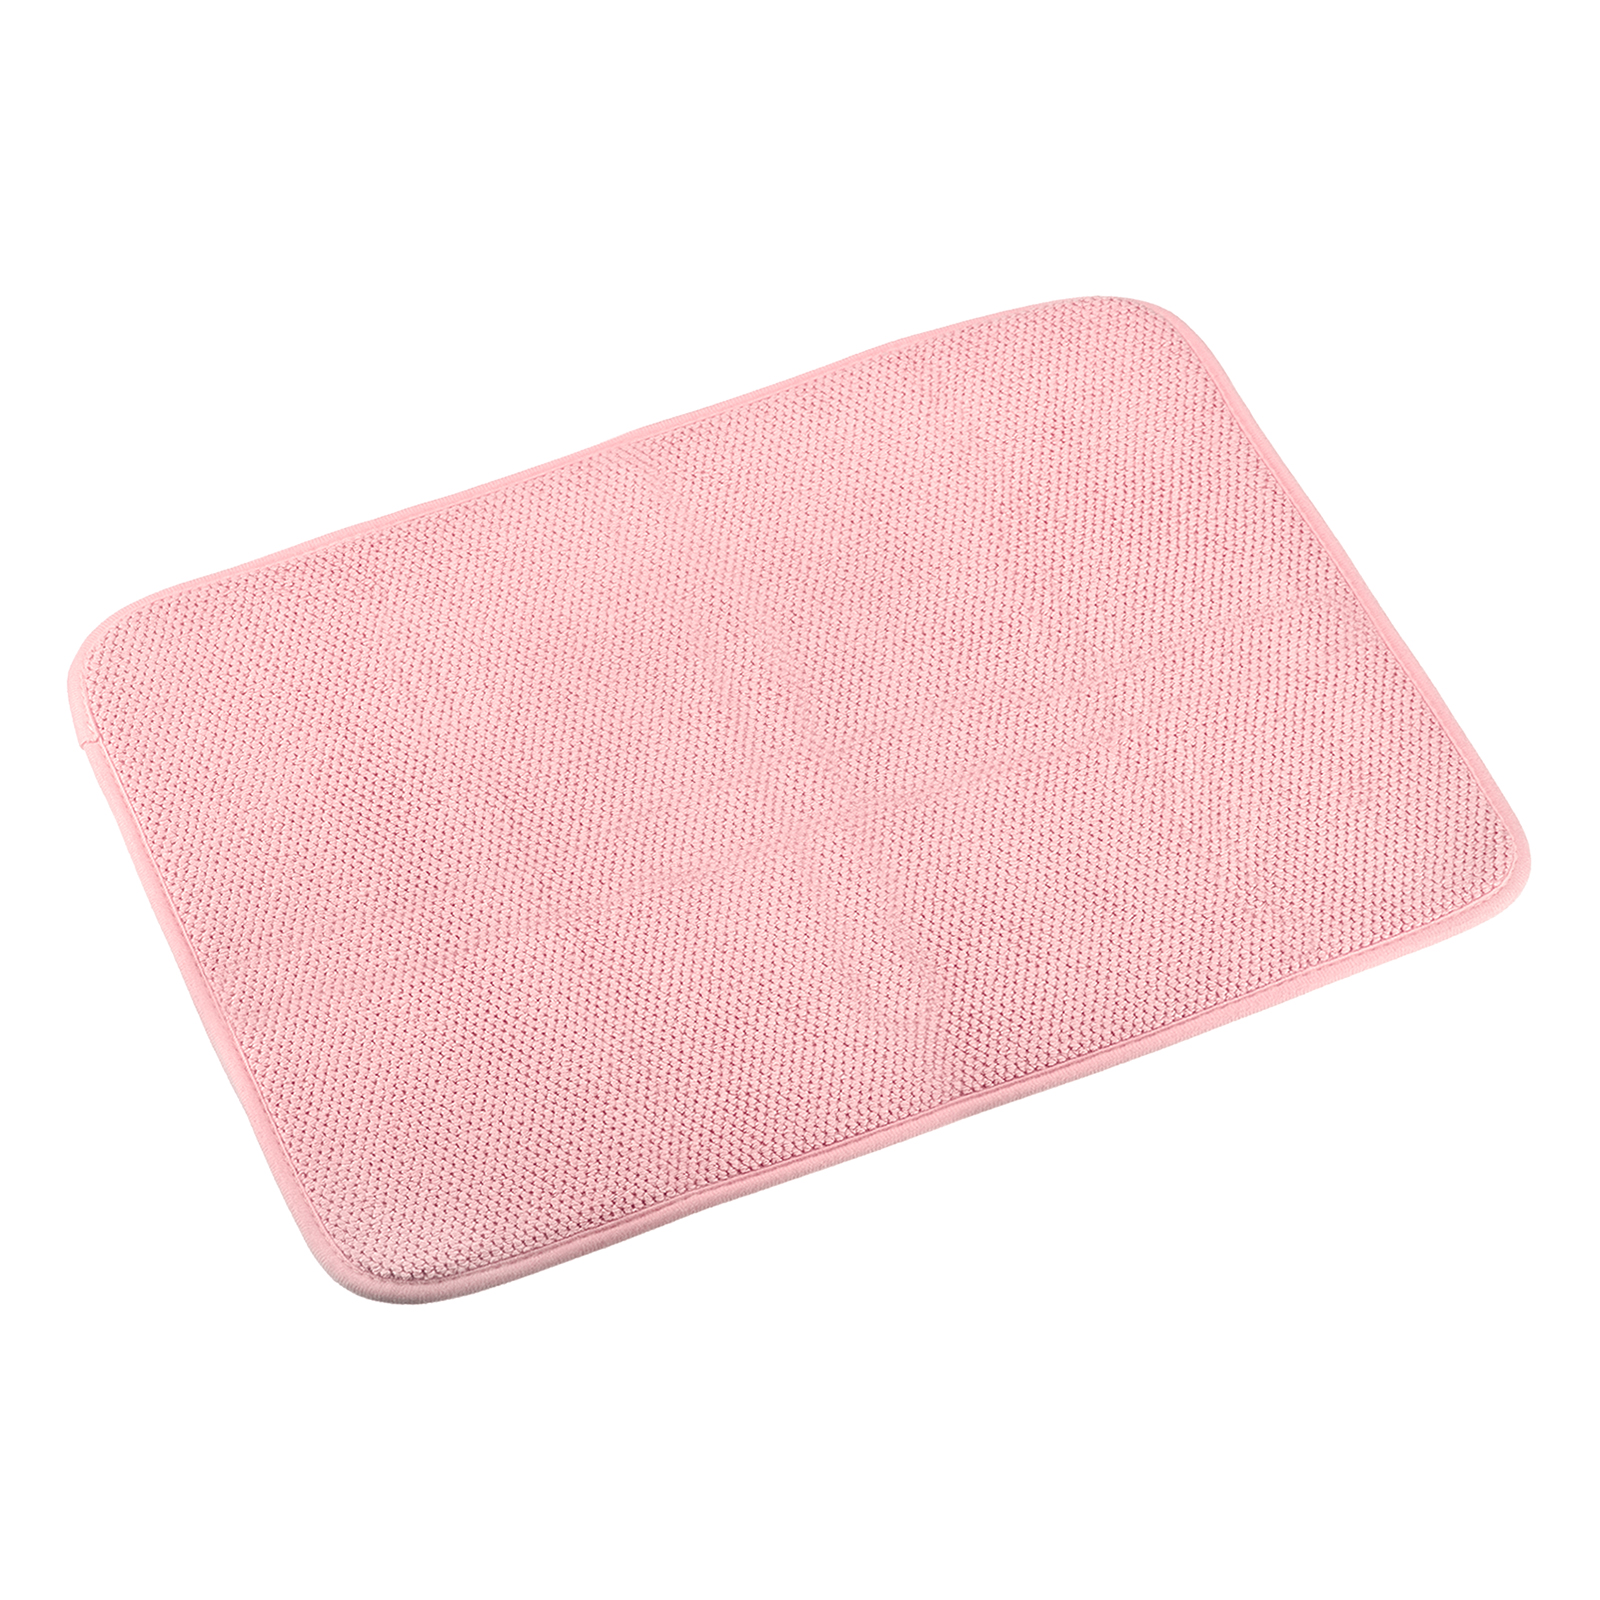 Unique Bargains Microfiber Dish Drying Mat Kitchen Sink Drainer Tea Towel-Pink Red